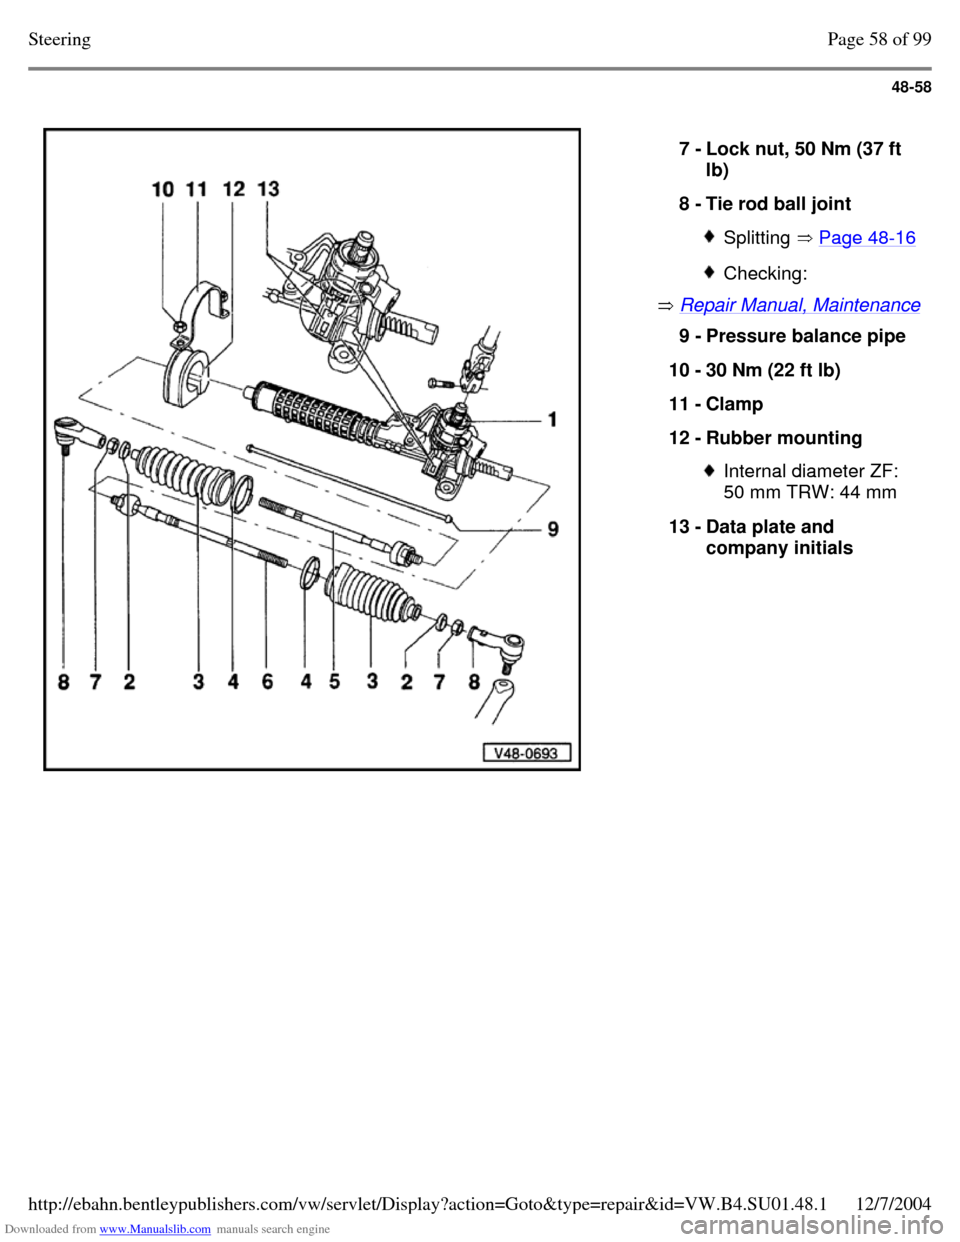 VOLKSWAGEN PASSAT 1996 B3, B4 / 3.G Service Workshop Manual Downloaded from www.Manualslib.com manuals search engine 48-58
   
 Repair Manual, Maintenance  7 - Lock nut, 50 Nm (37 ft 
lb) 
8 - Tie rod ball joint  Splitting  Page 48-16  Checking: 9 - Pressure b